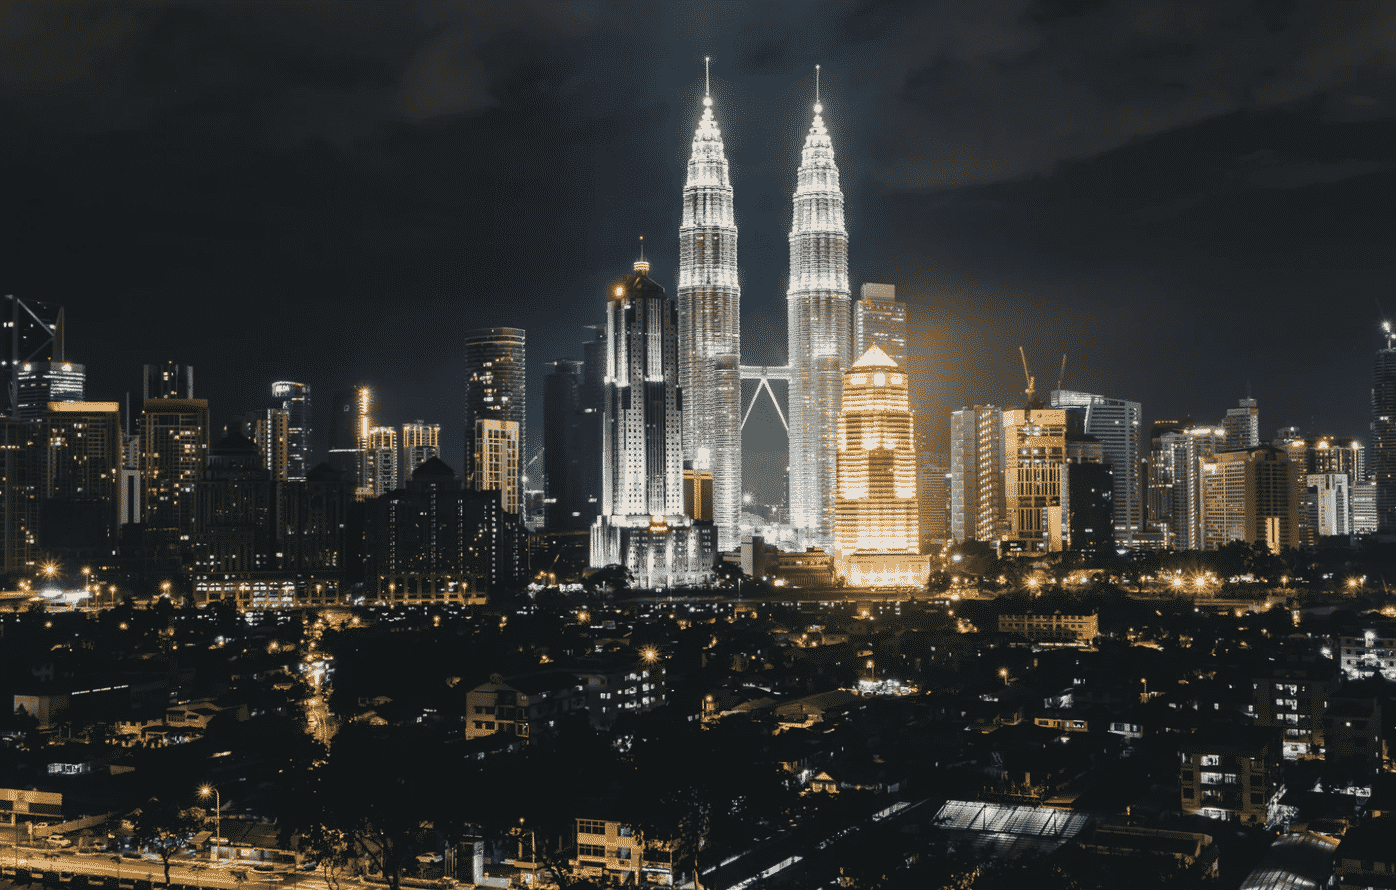 Things to do in Kuala Lumpur